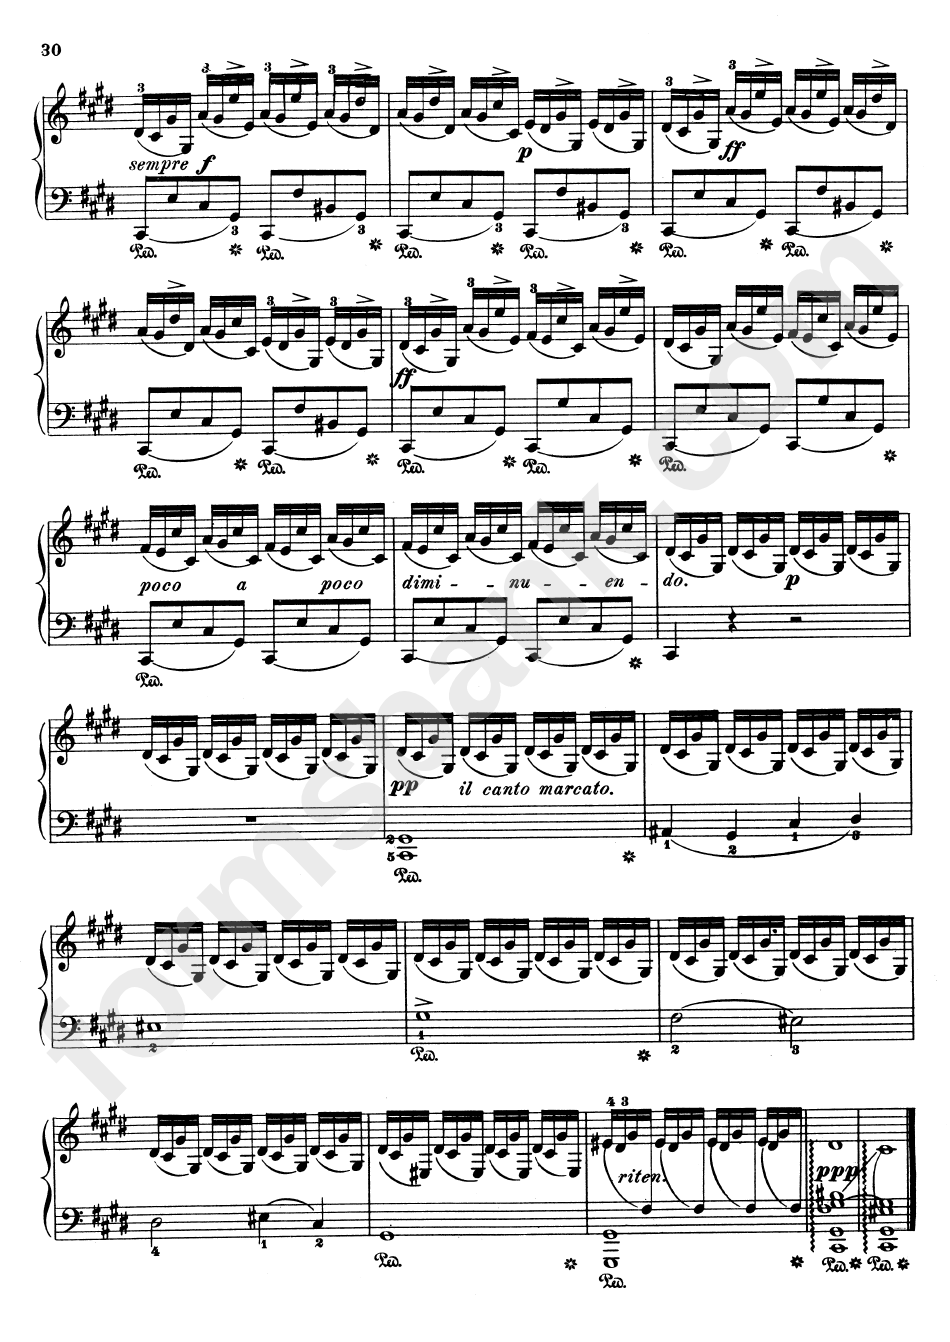 F. Chopin - Fantaisie - Impromptu Sheet Music